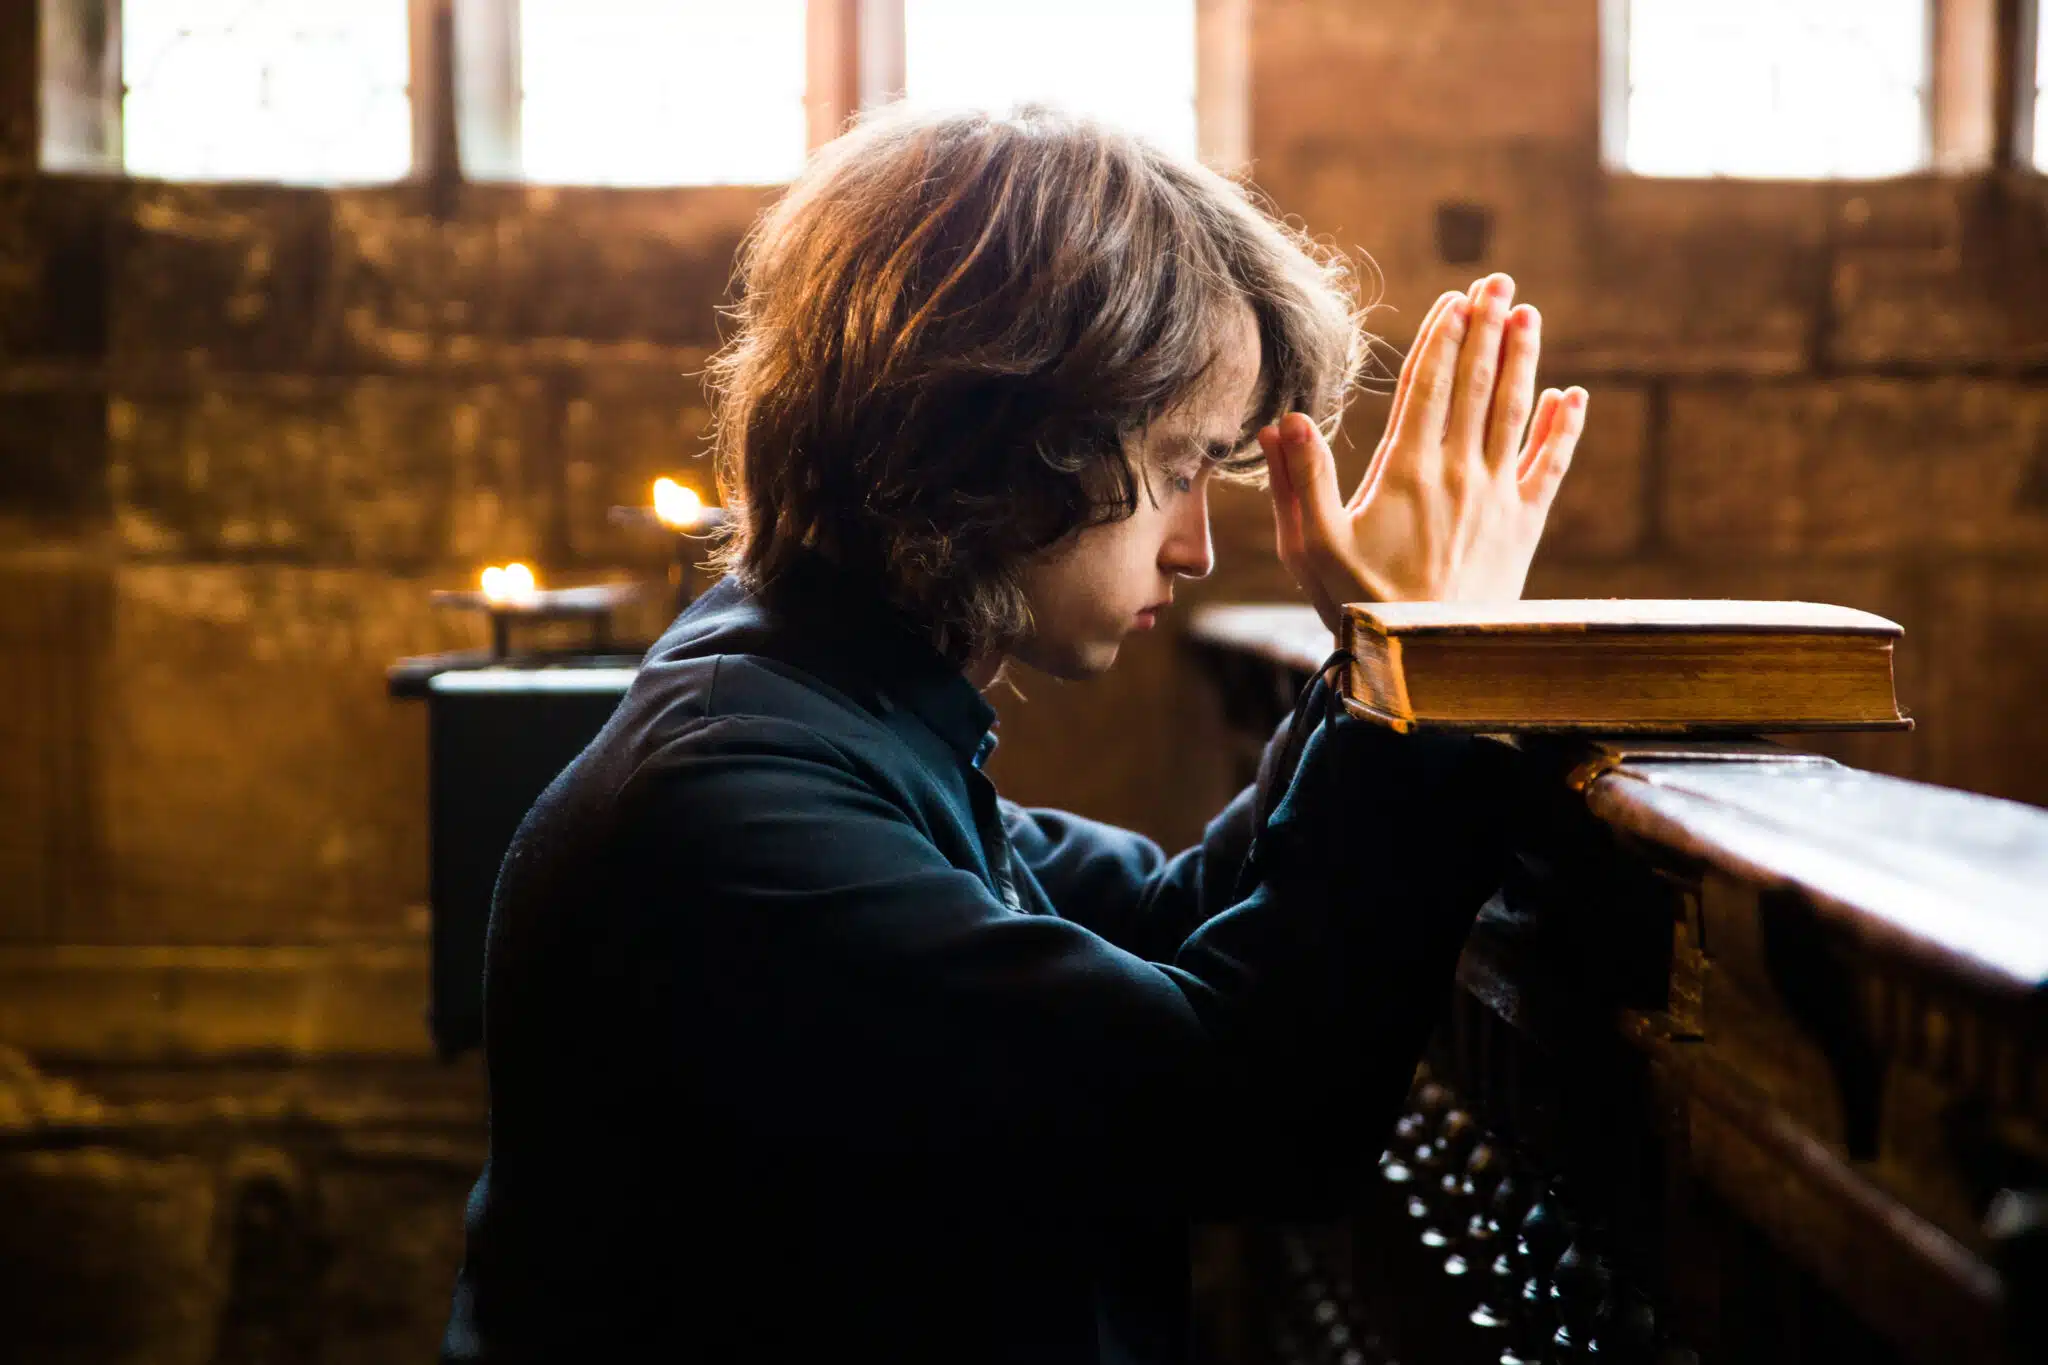 Young boy praying in a church